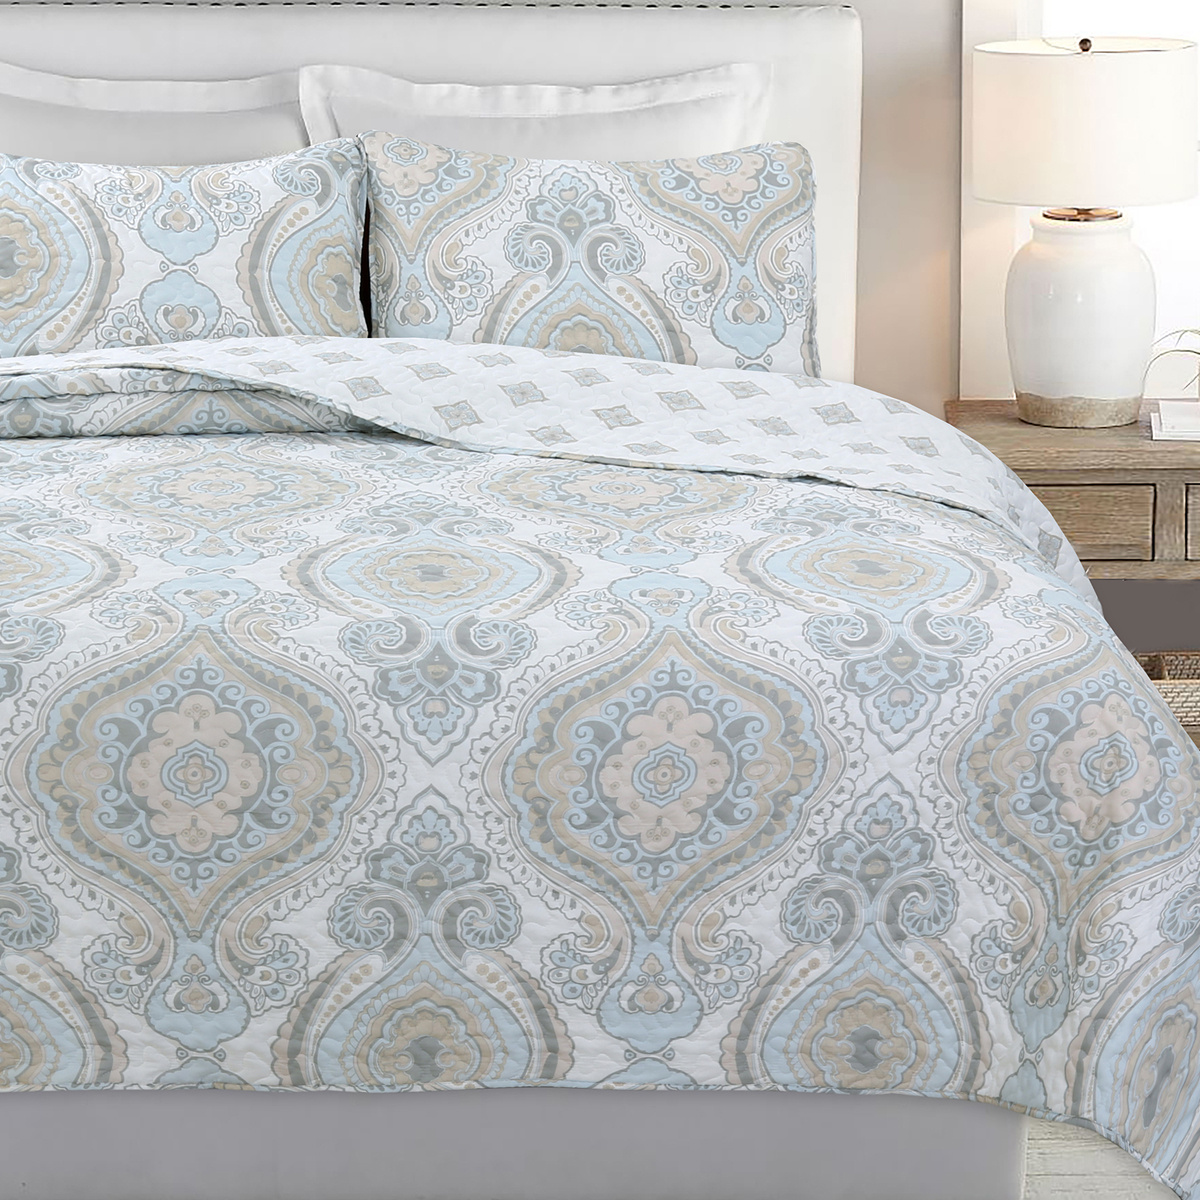 

Modern Medallion Sky Blue Tan Gray Brocade 3-piece Reversible Quilt Bedding Set, Lightweight Bedspread Coverlet For All Seasons